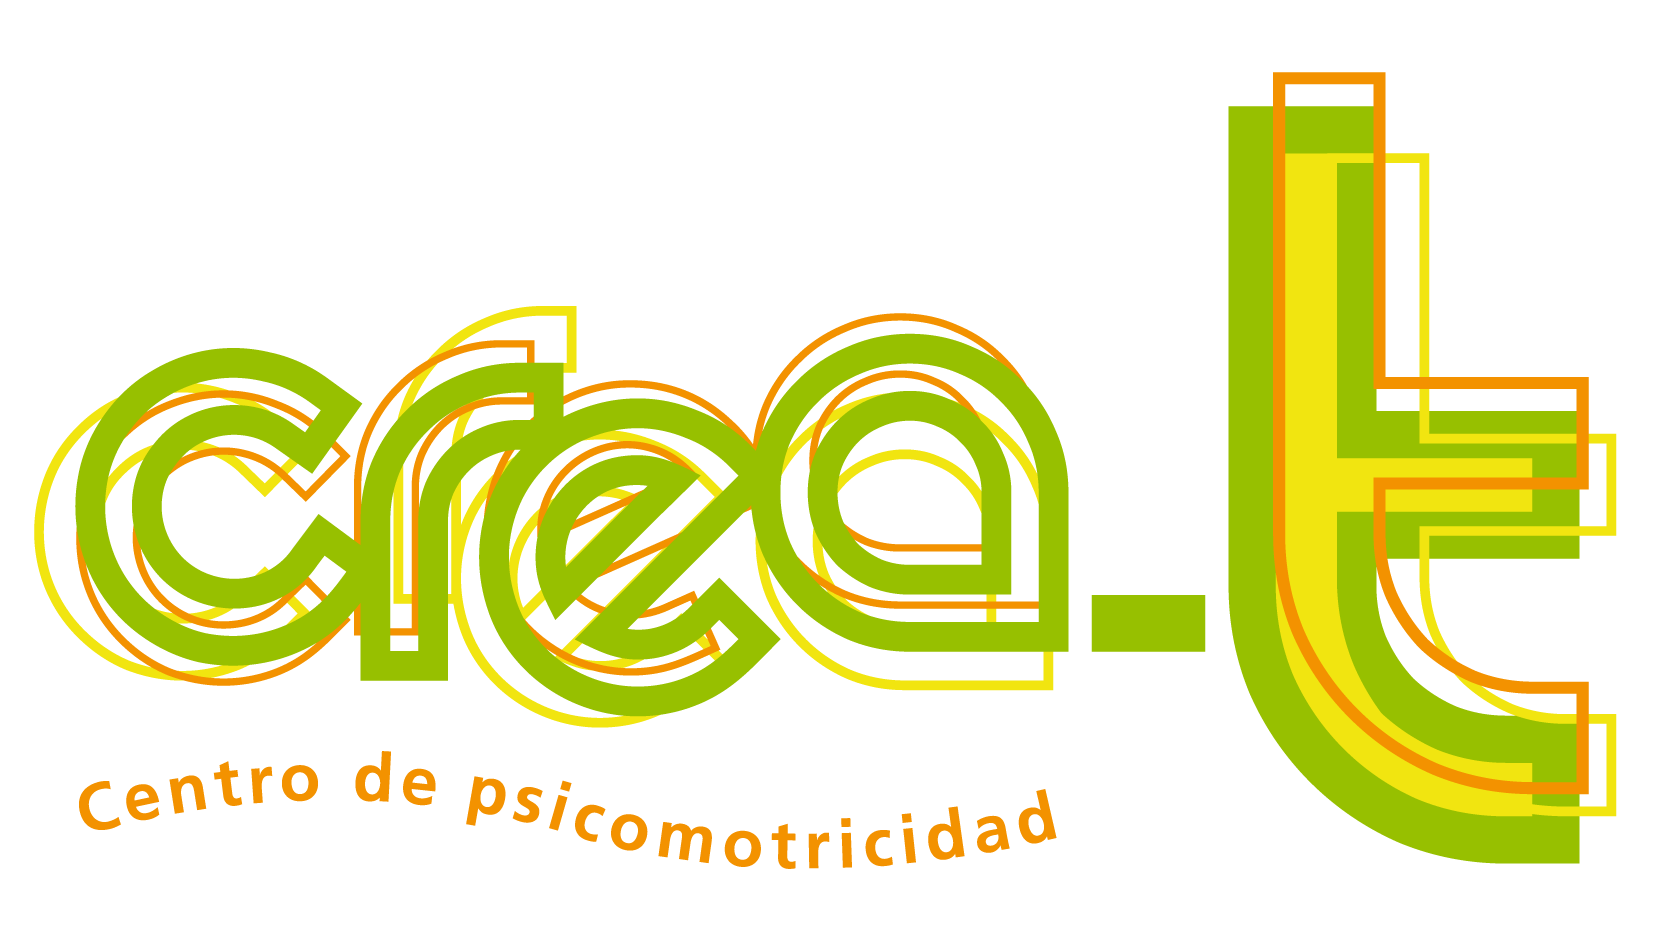 Crea_t logo